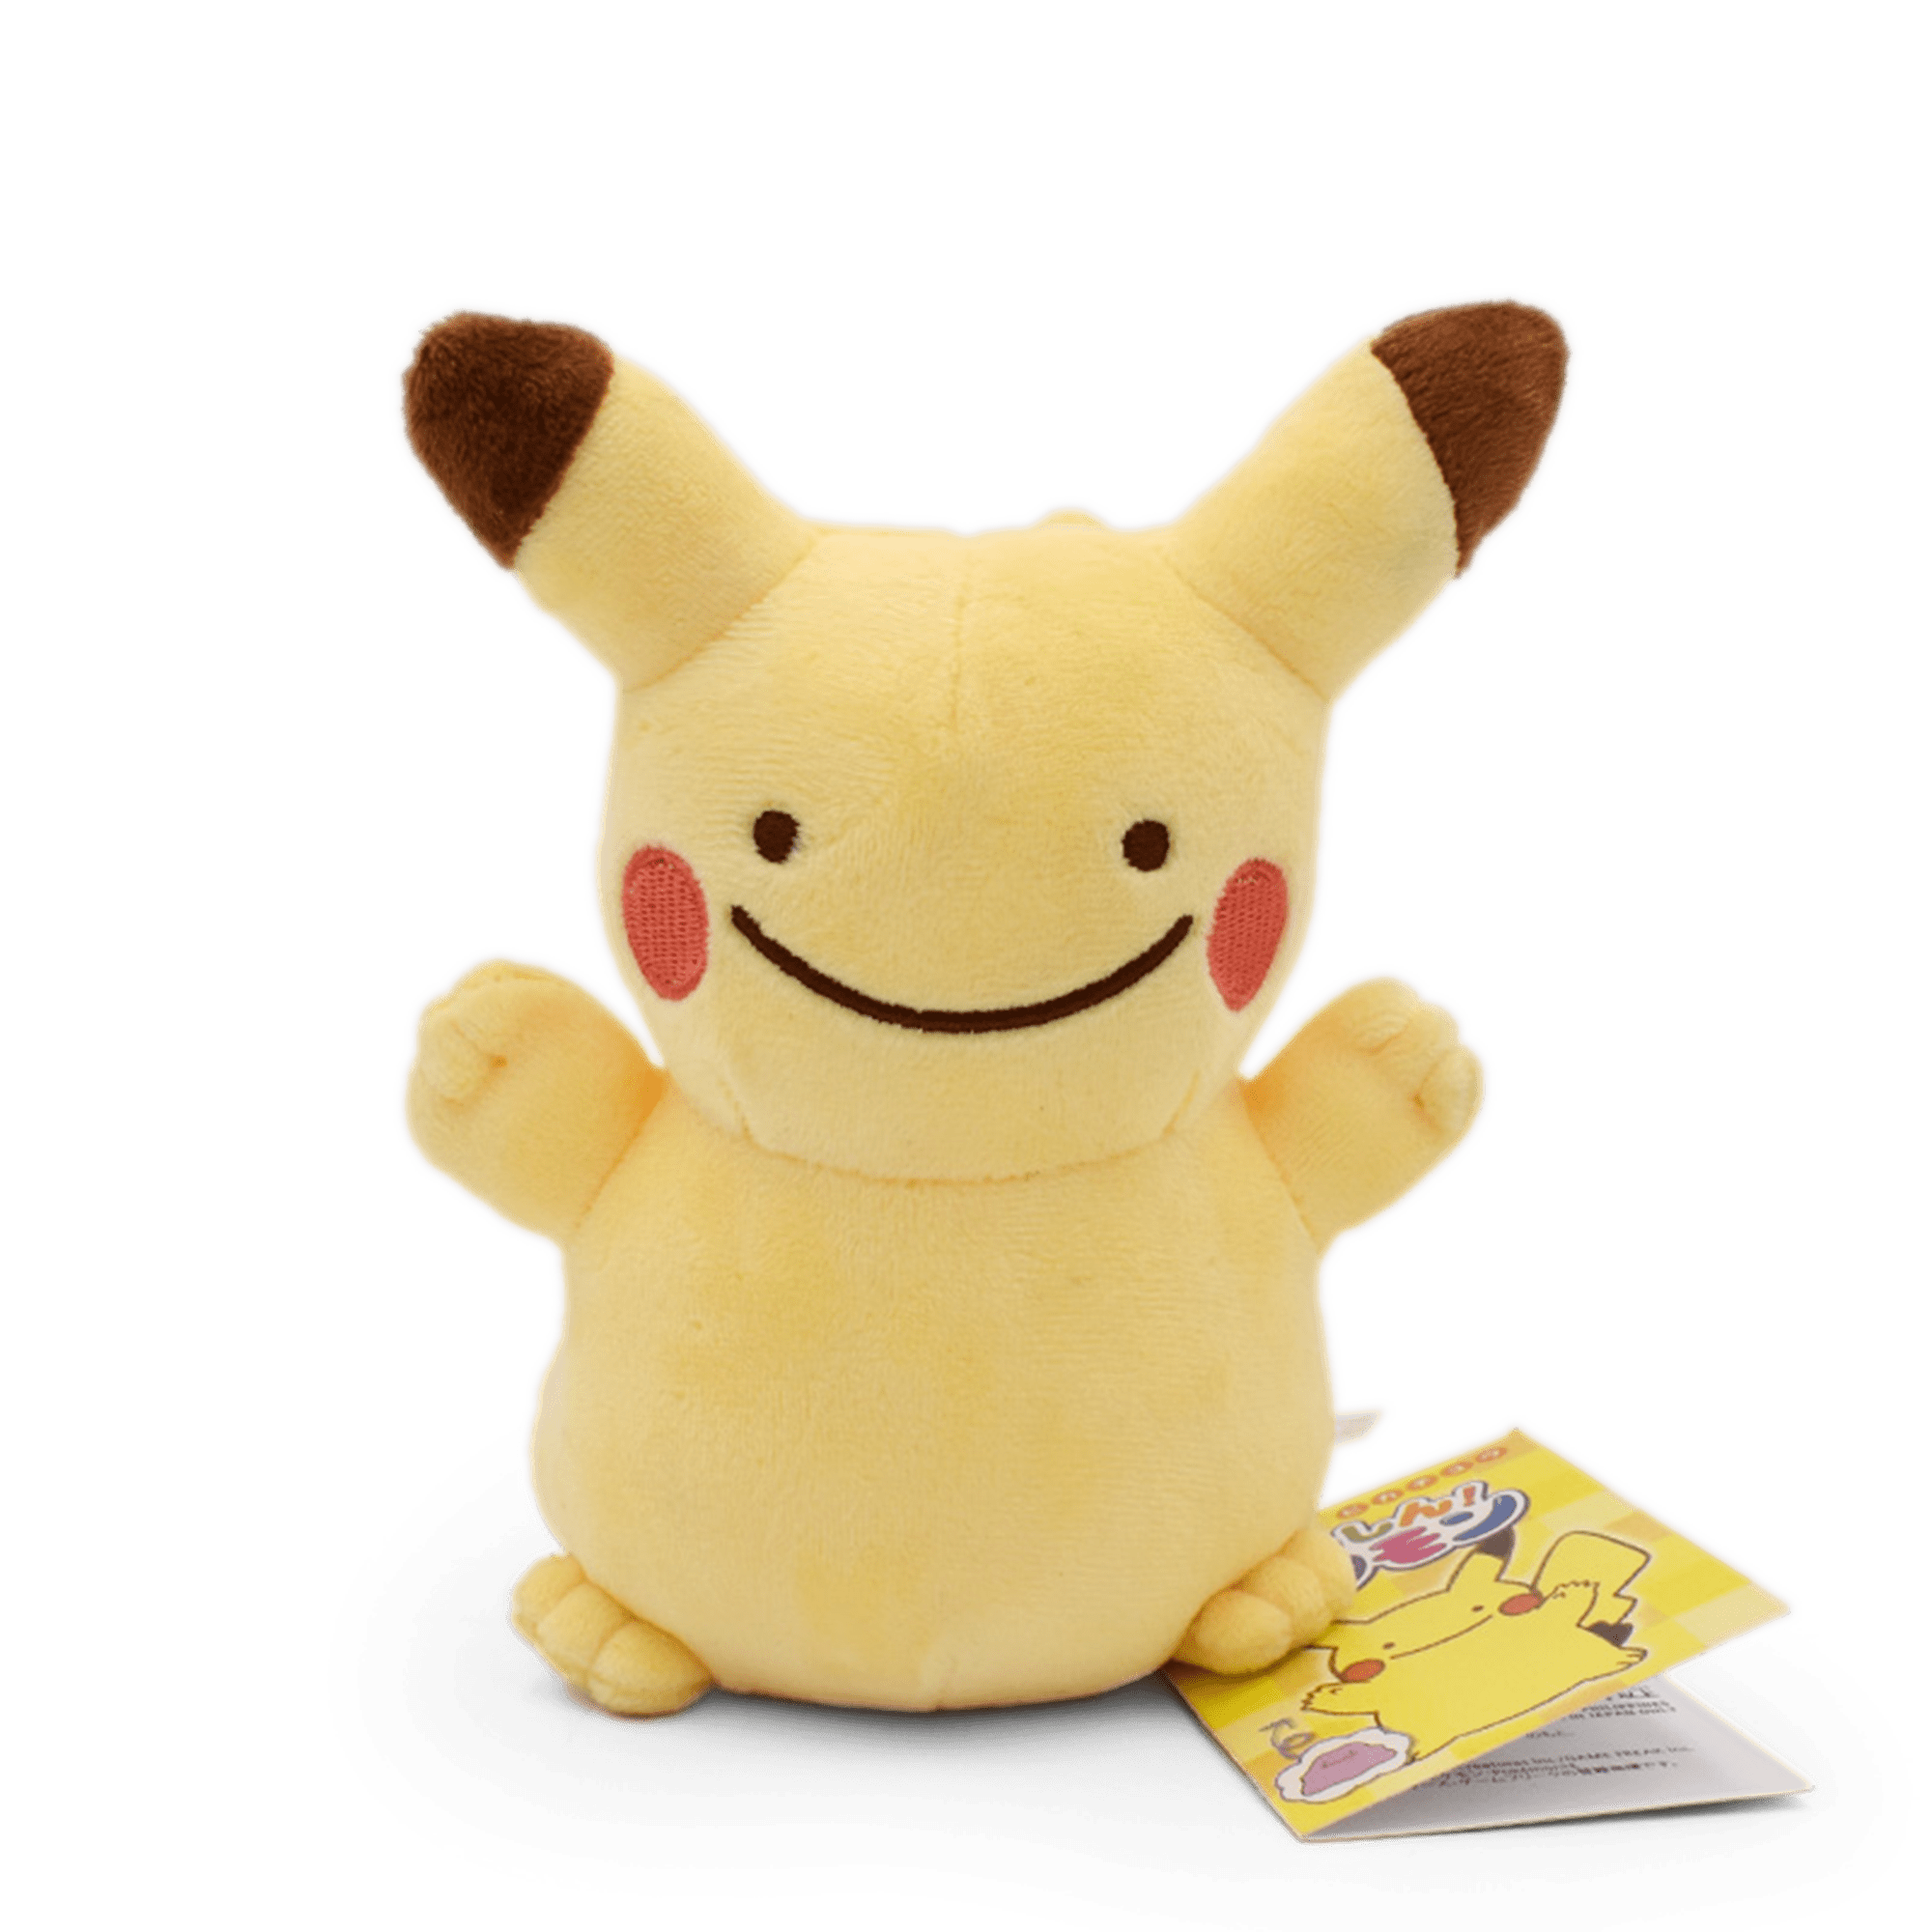 Pokemon Raichu Plush Evolve from Pikachu Soft Toy Doll Teddy Stuffed Animal 5.5" 